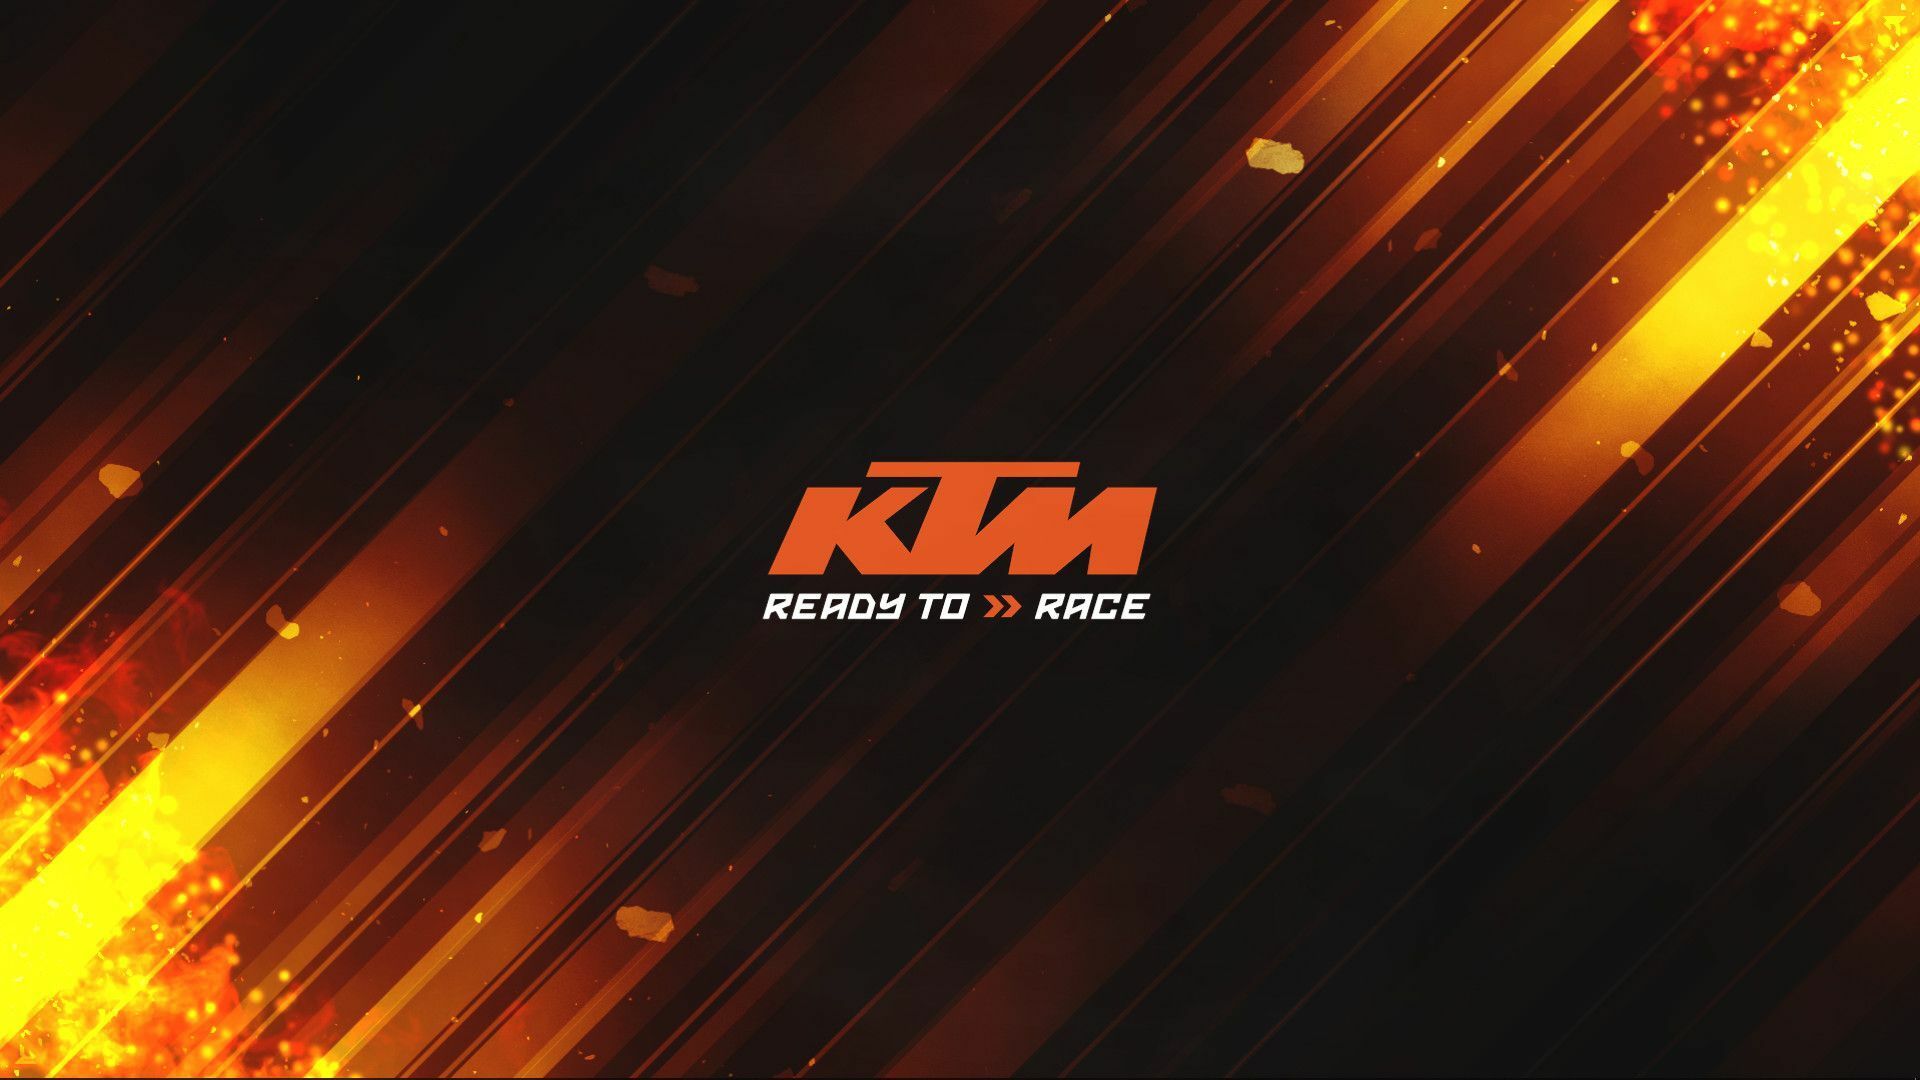 KTM live wallpaper [DOWNLOAD FREE]